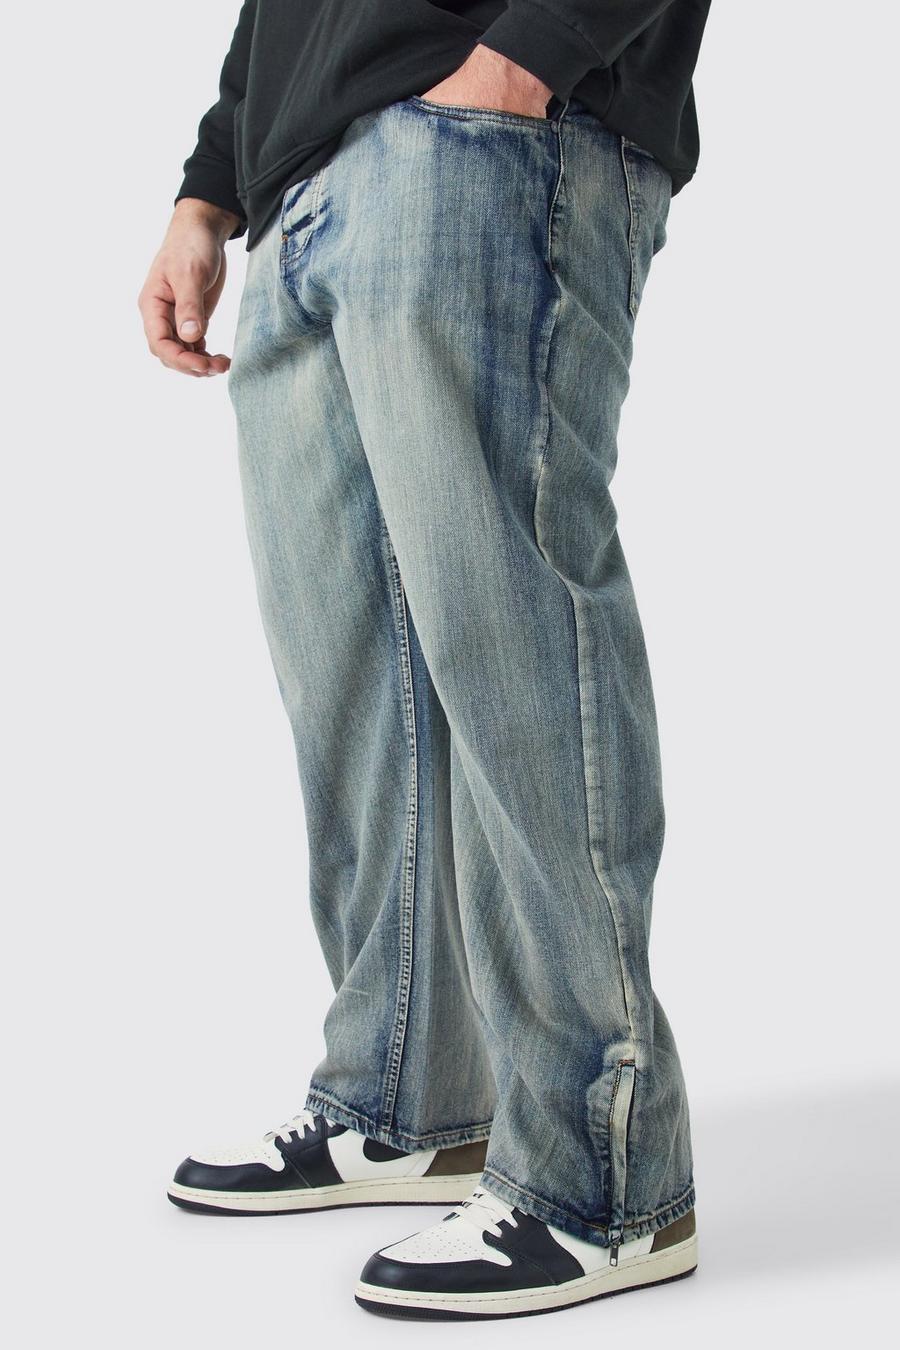 Jeans rilassati Plus Size in denim rigido con zip sul fondo, Antique wash